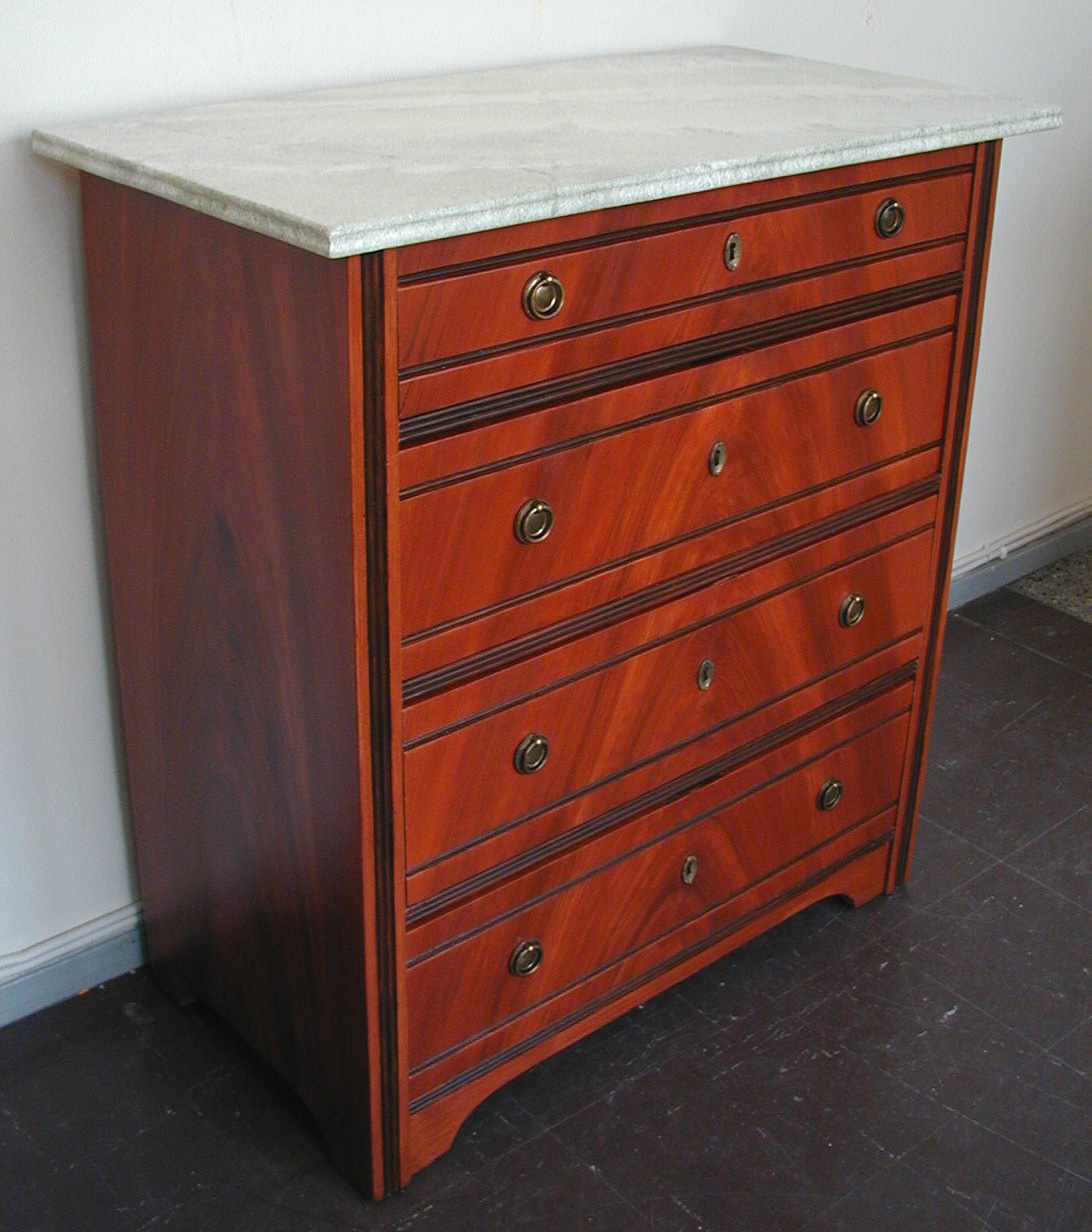 Mahognylaserad byrå med marmorerad skiva / Chest of drawers in mahogany grain and a top in marbling